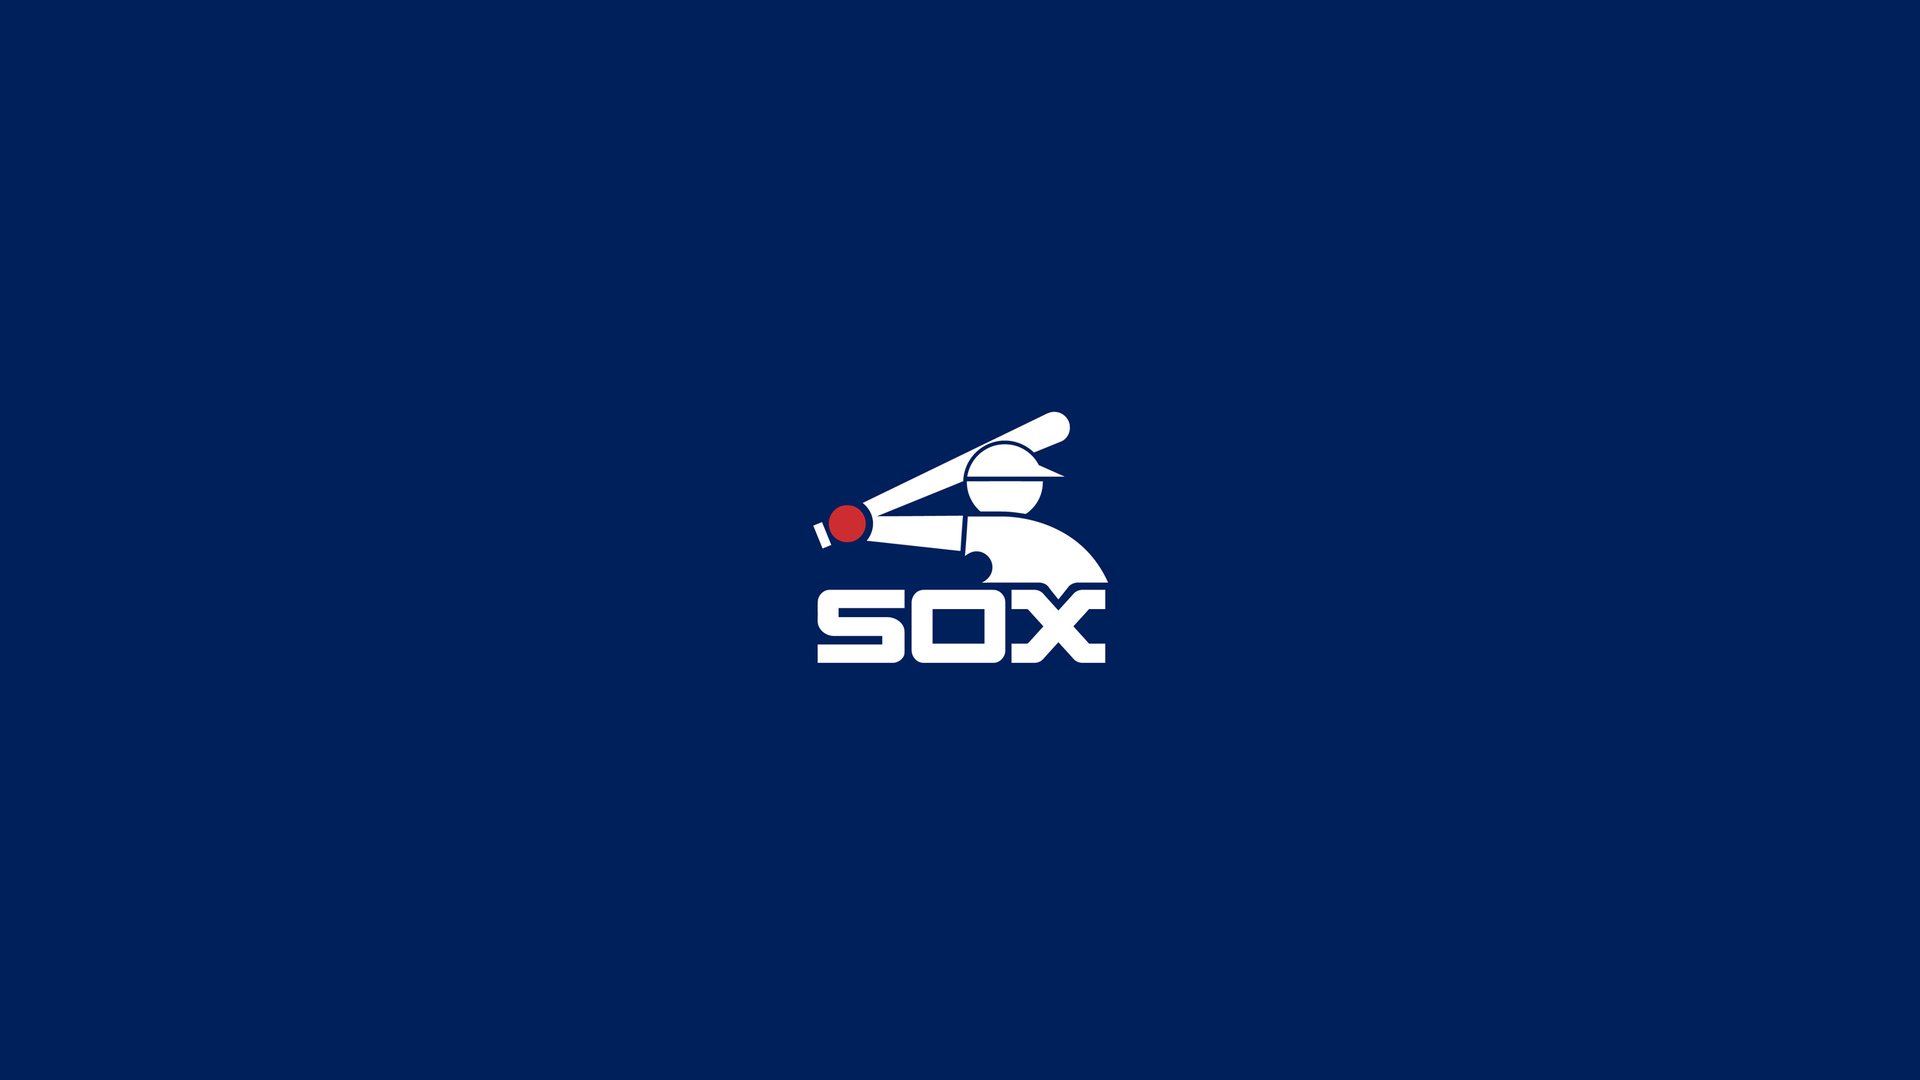 Chicago White Sox Wallpaper Hd Pixelstalk Net